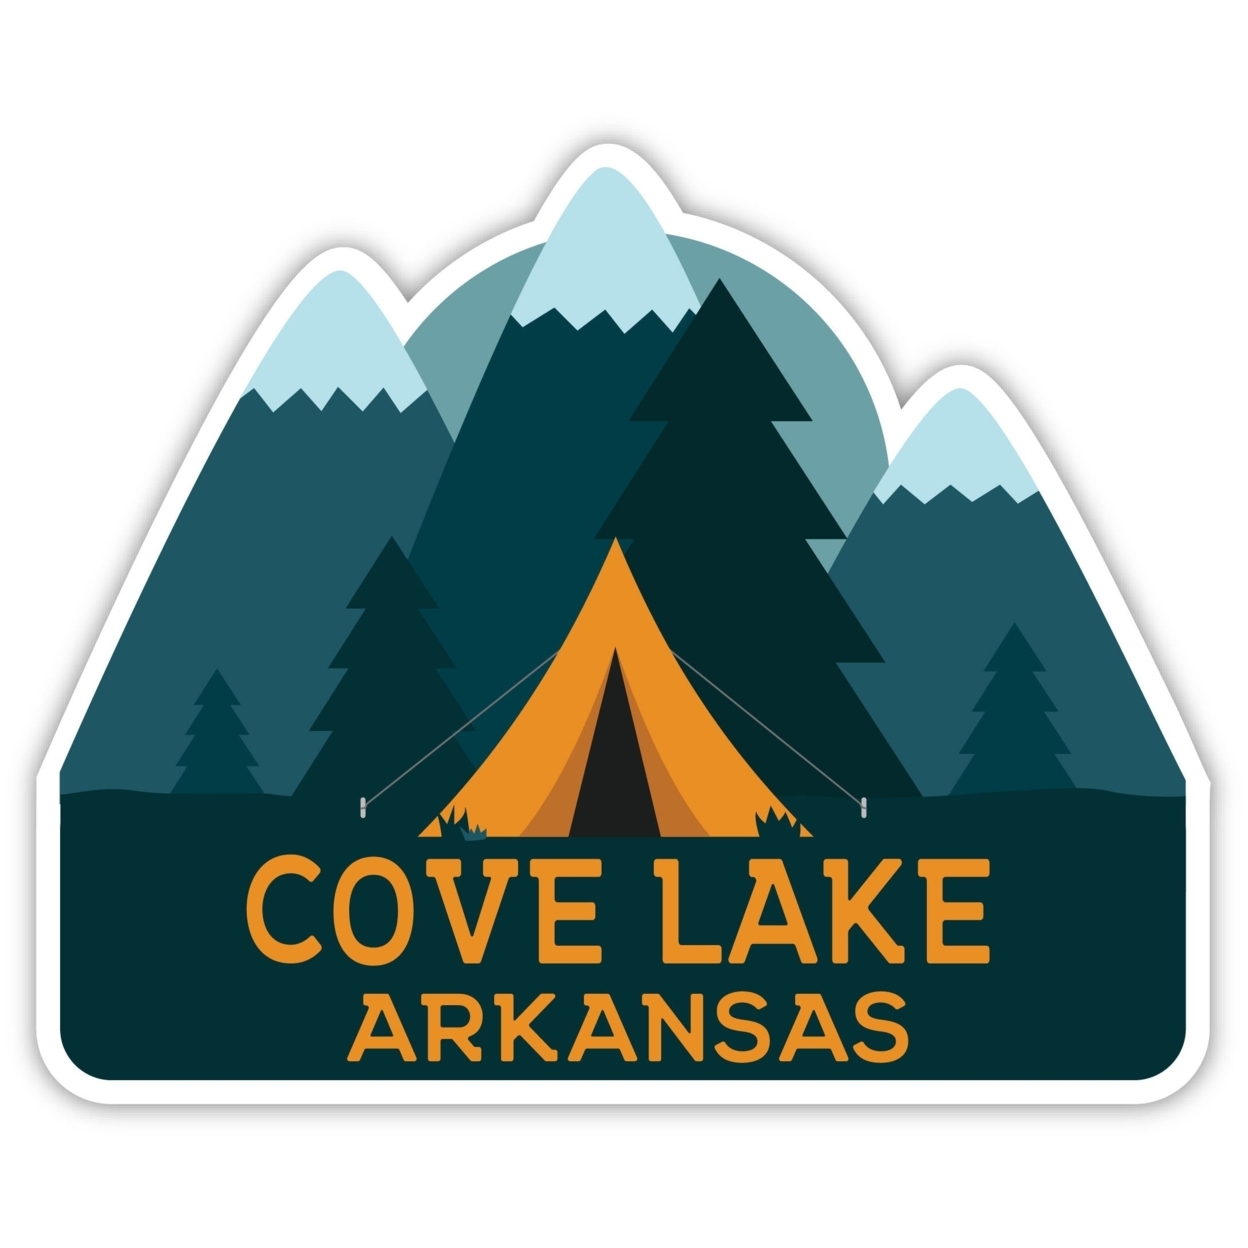 Cove Lake Arkansas Souvenir Decorative Stickers (Choose Theme And Size) - 4-Pack, 2-Inch, Tent